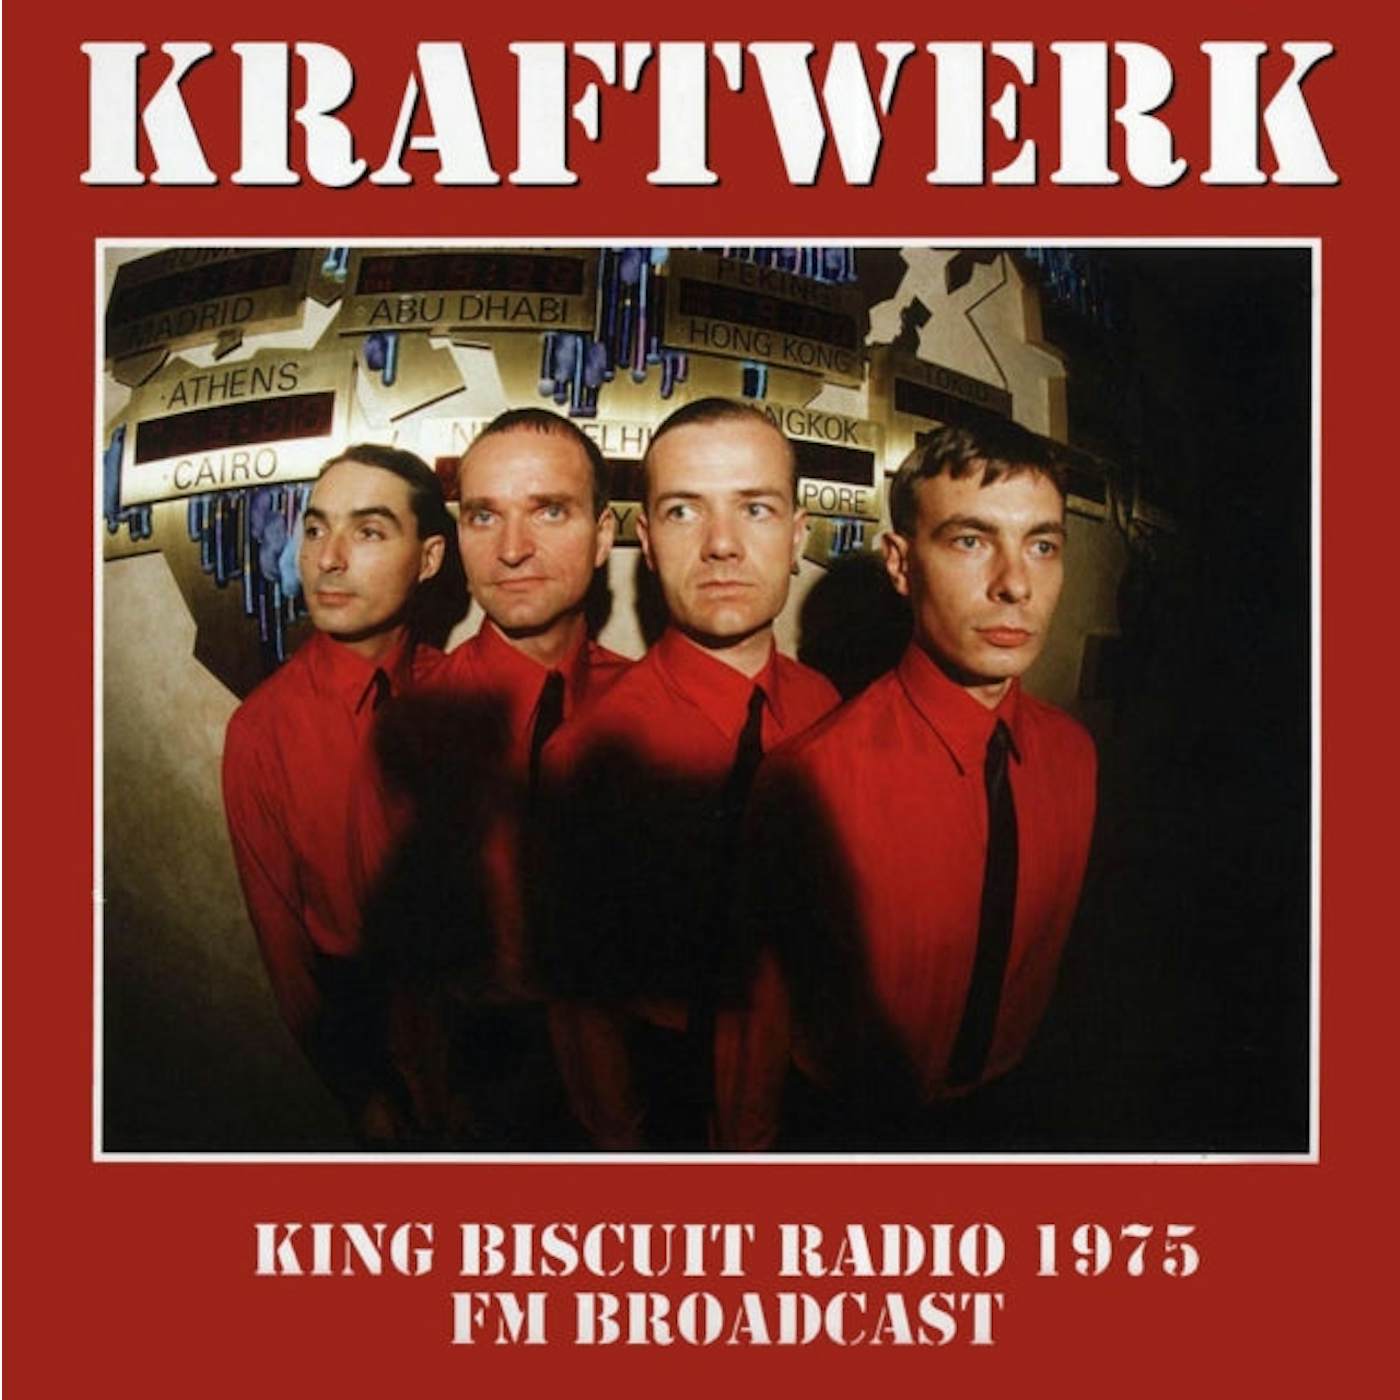 Kraftwerk LP Vinyl Record - King Biscuit Radio 19 75 Fm Broadcast